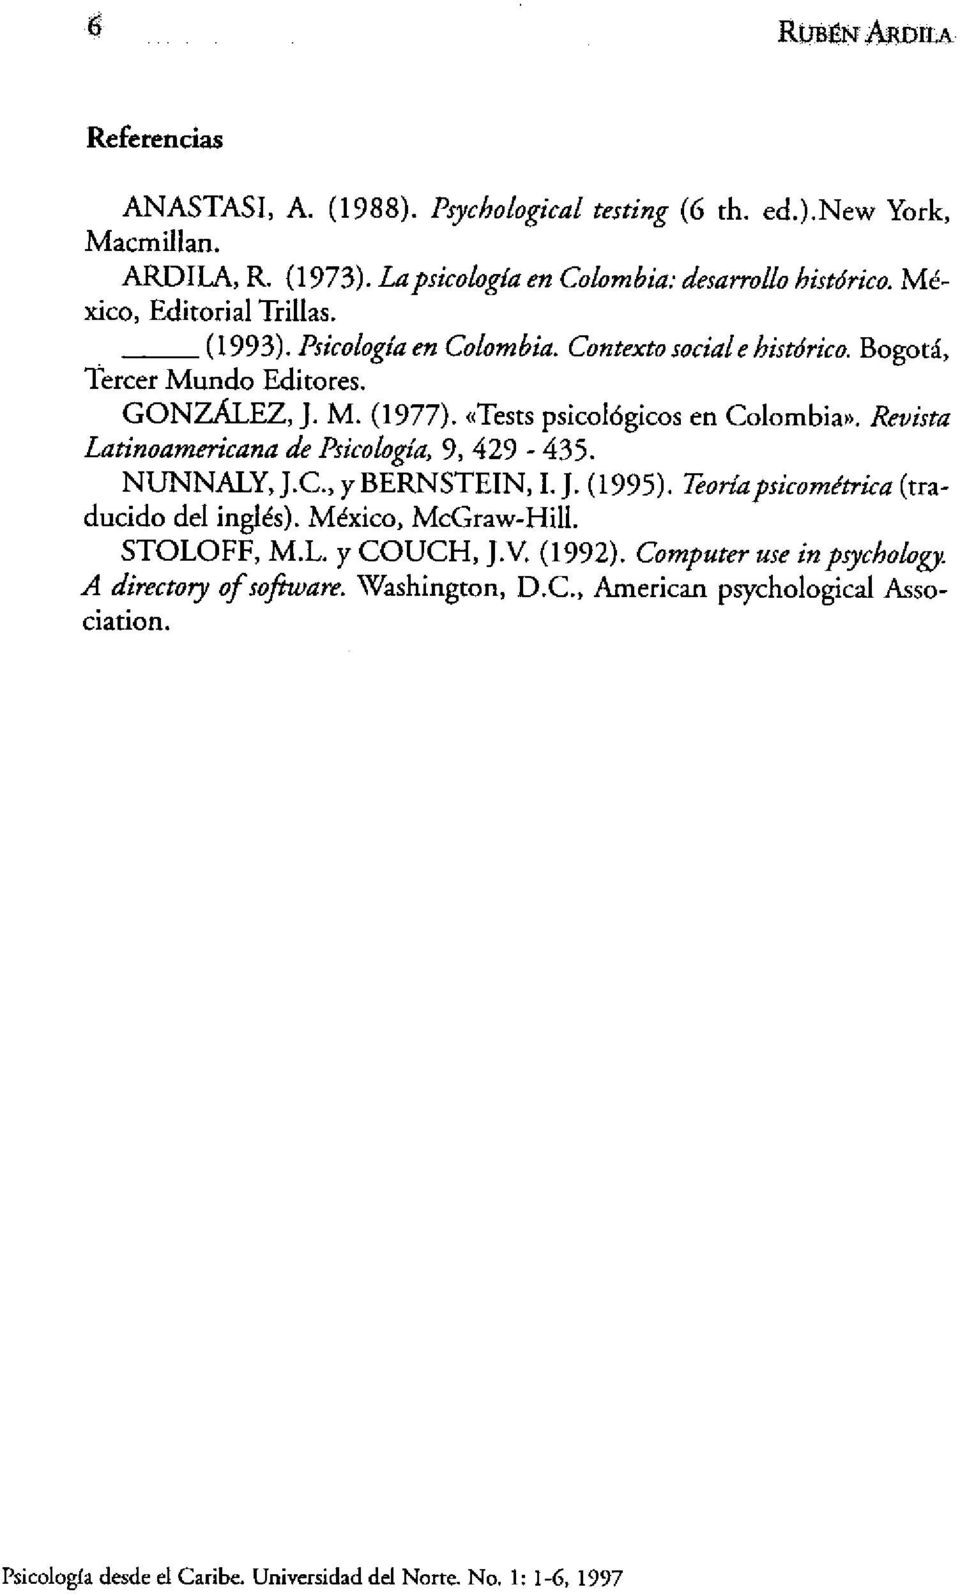 Revista Latinoamericana de Psicologia, 9, 429-435. NUNNALY,J.C., ybernstein, I.J. (1995). Teoriapsicométrica (traducido del inglés). México, McGraw-Hill. STOLOFF, M.L. y COUCH, J.